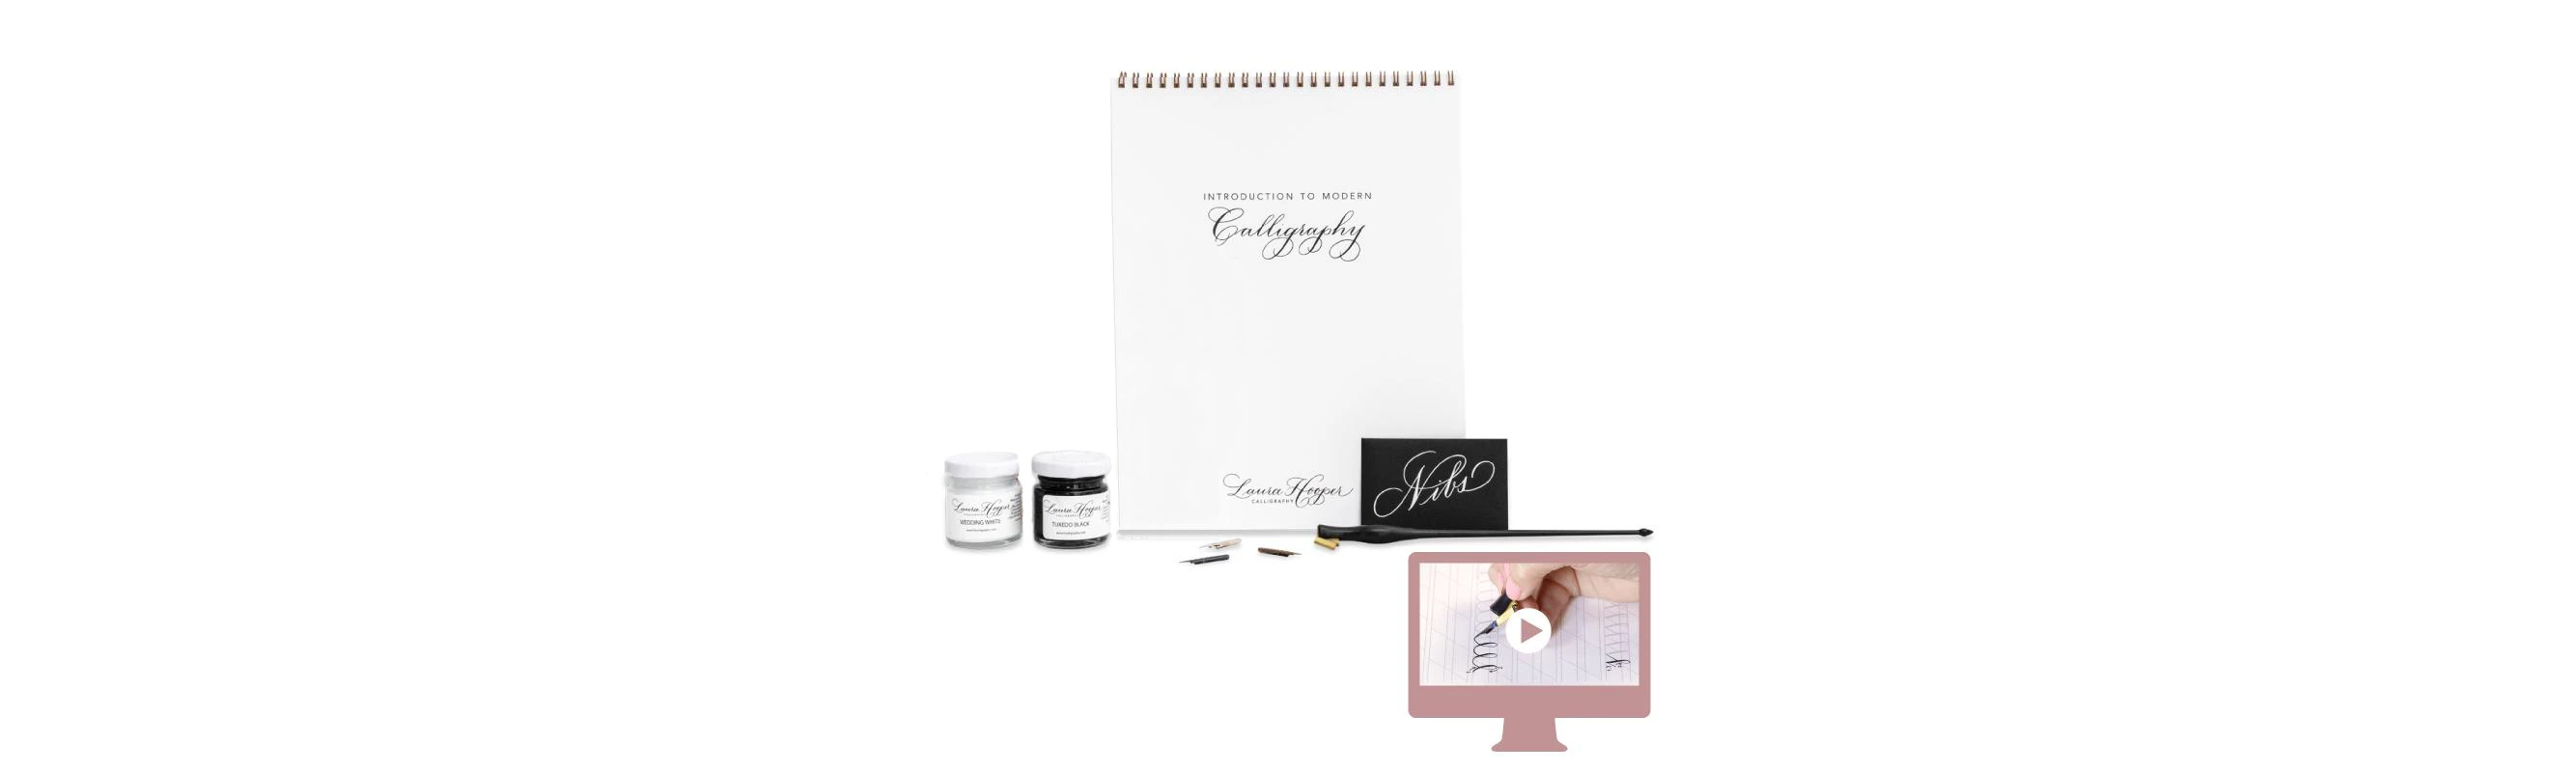 Beginner Calligraphy Kit: Starter Supplies Online Course